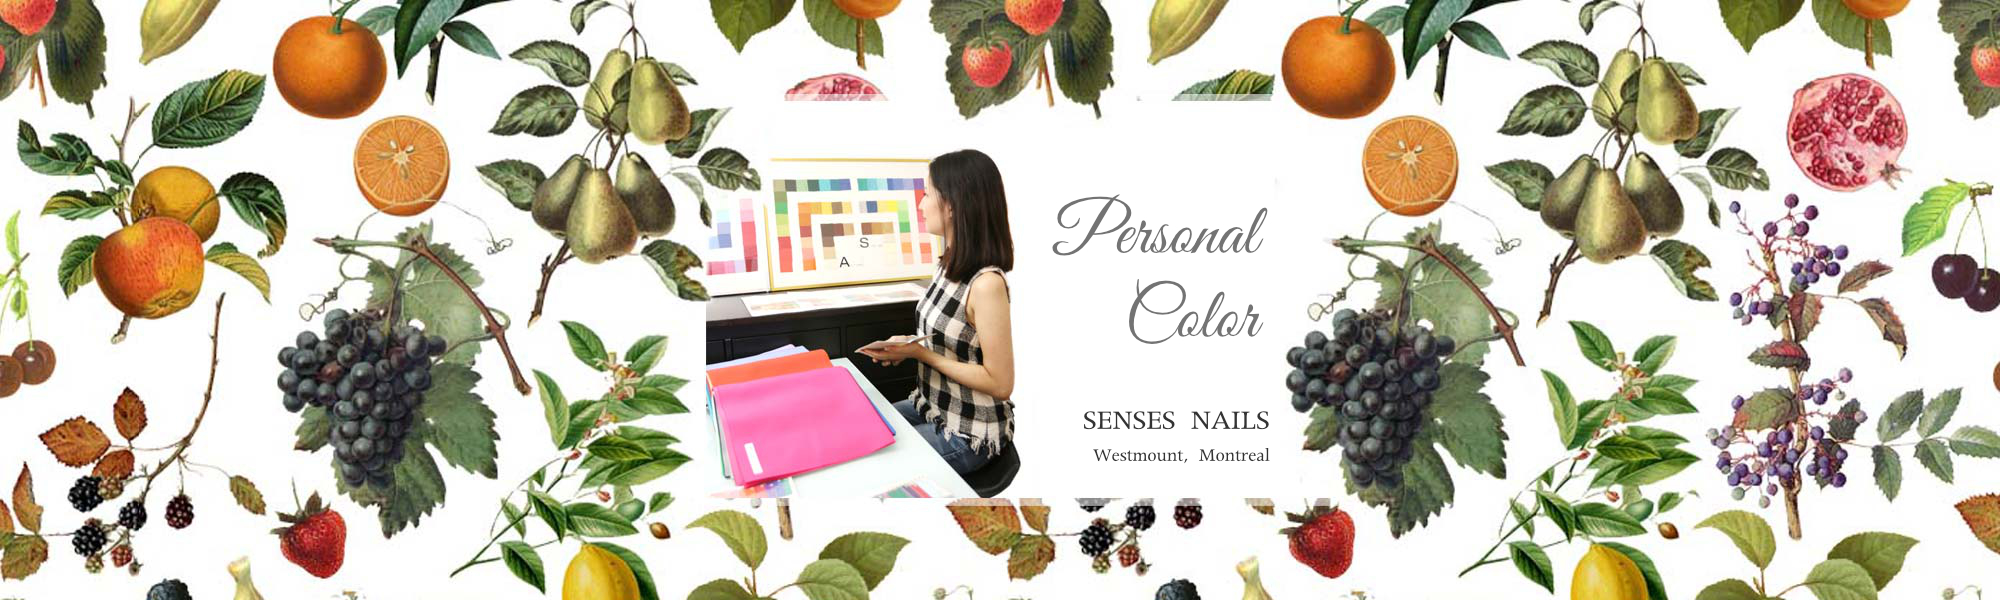 SENSES NAILS Personal colour